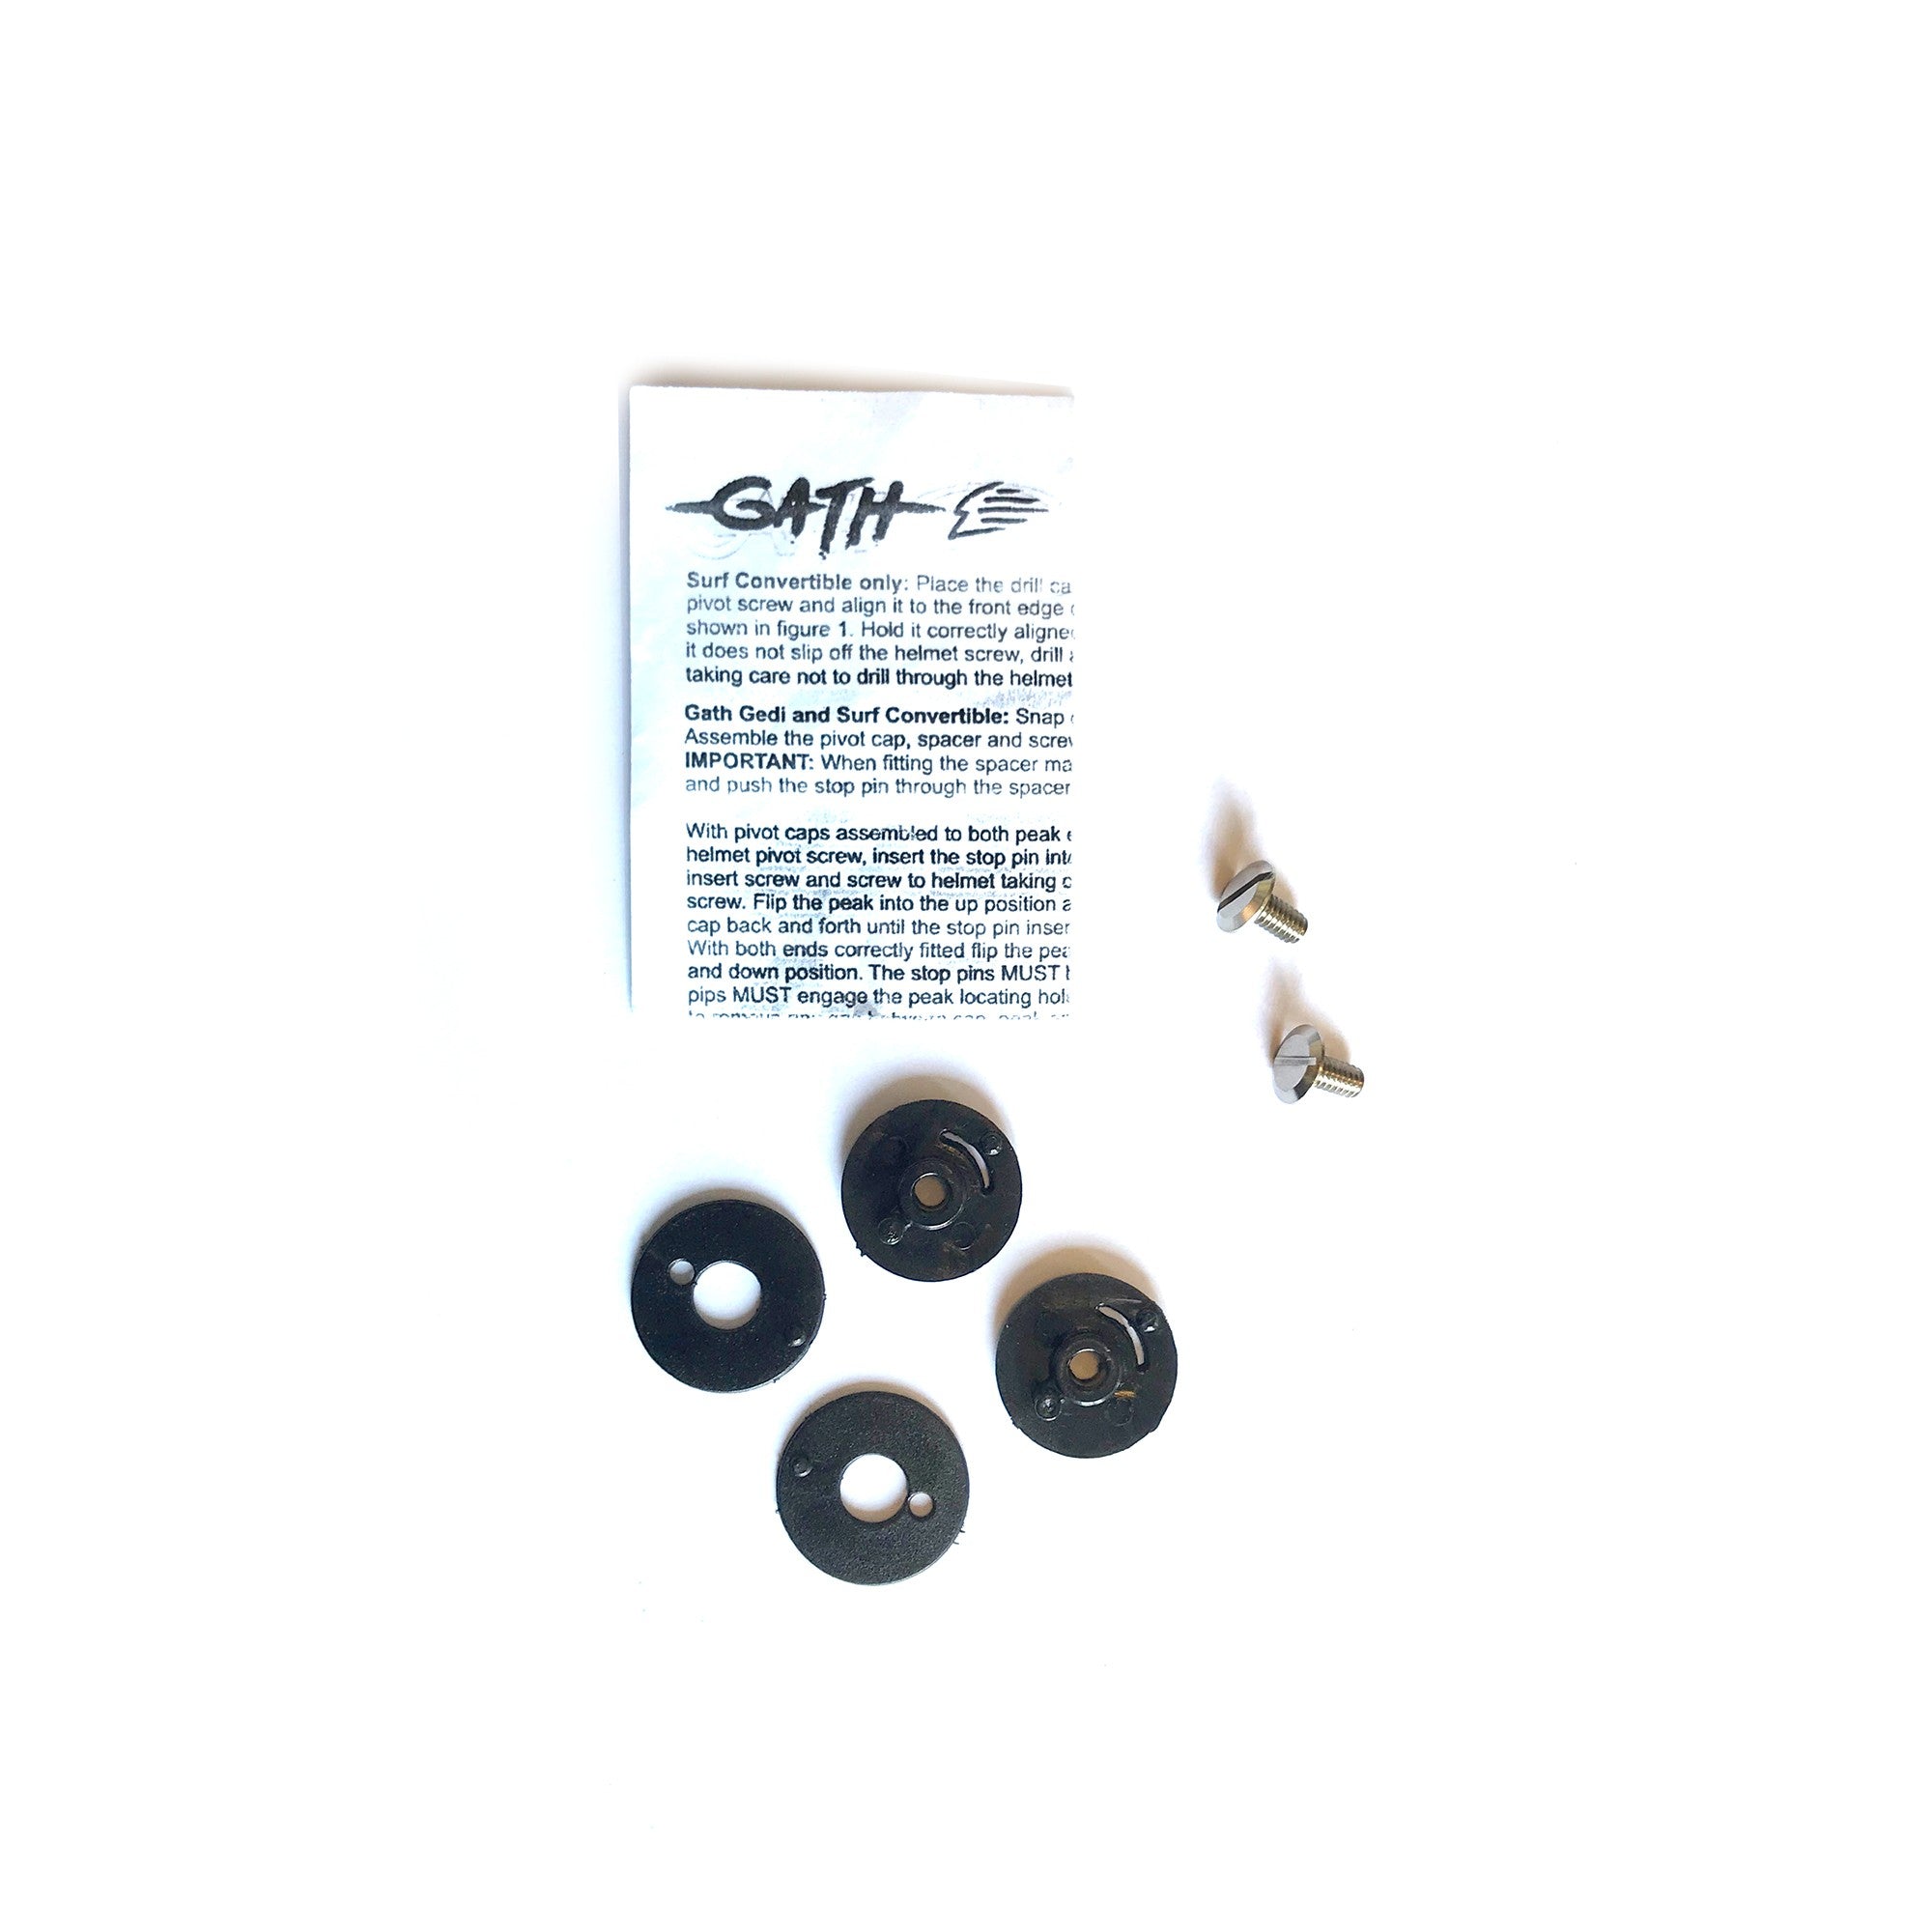 GATH - Kit de tornillos (para convertibles Gedi y SFC)